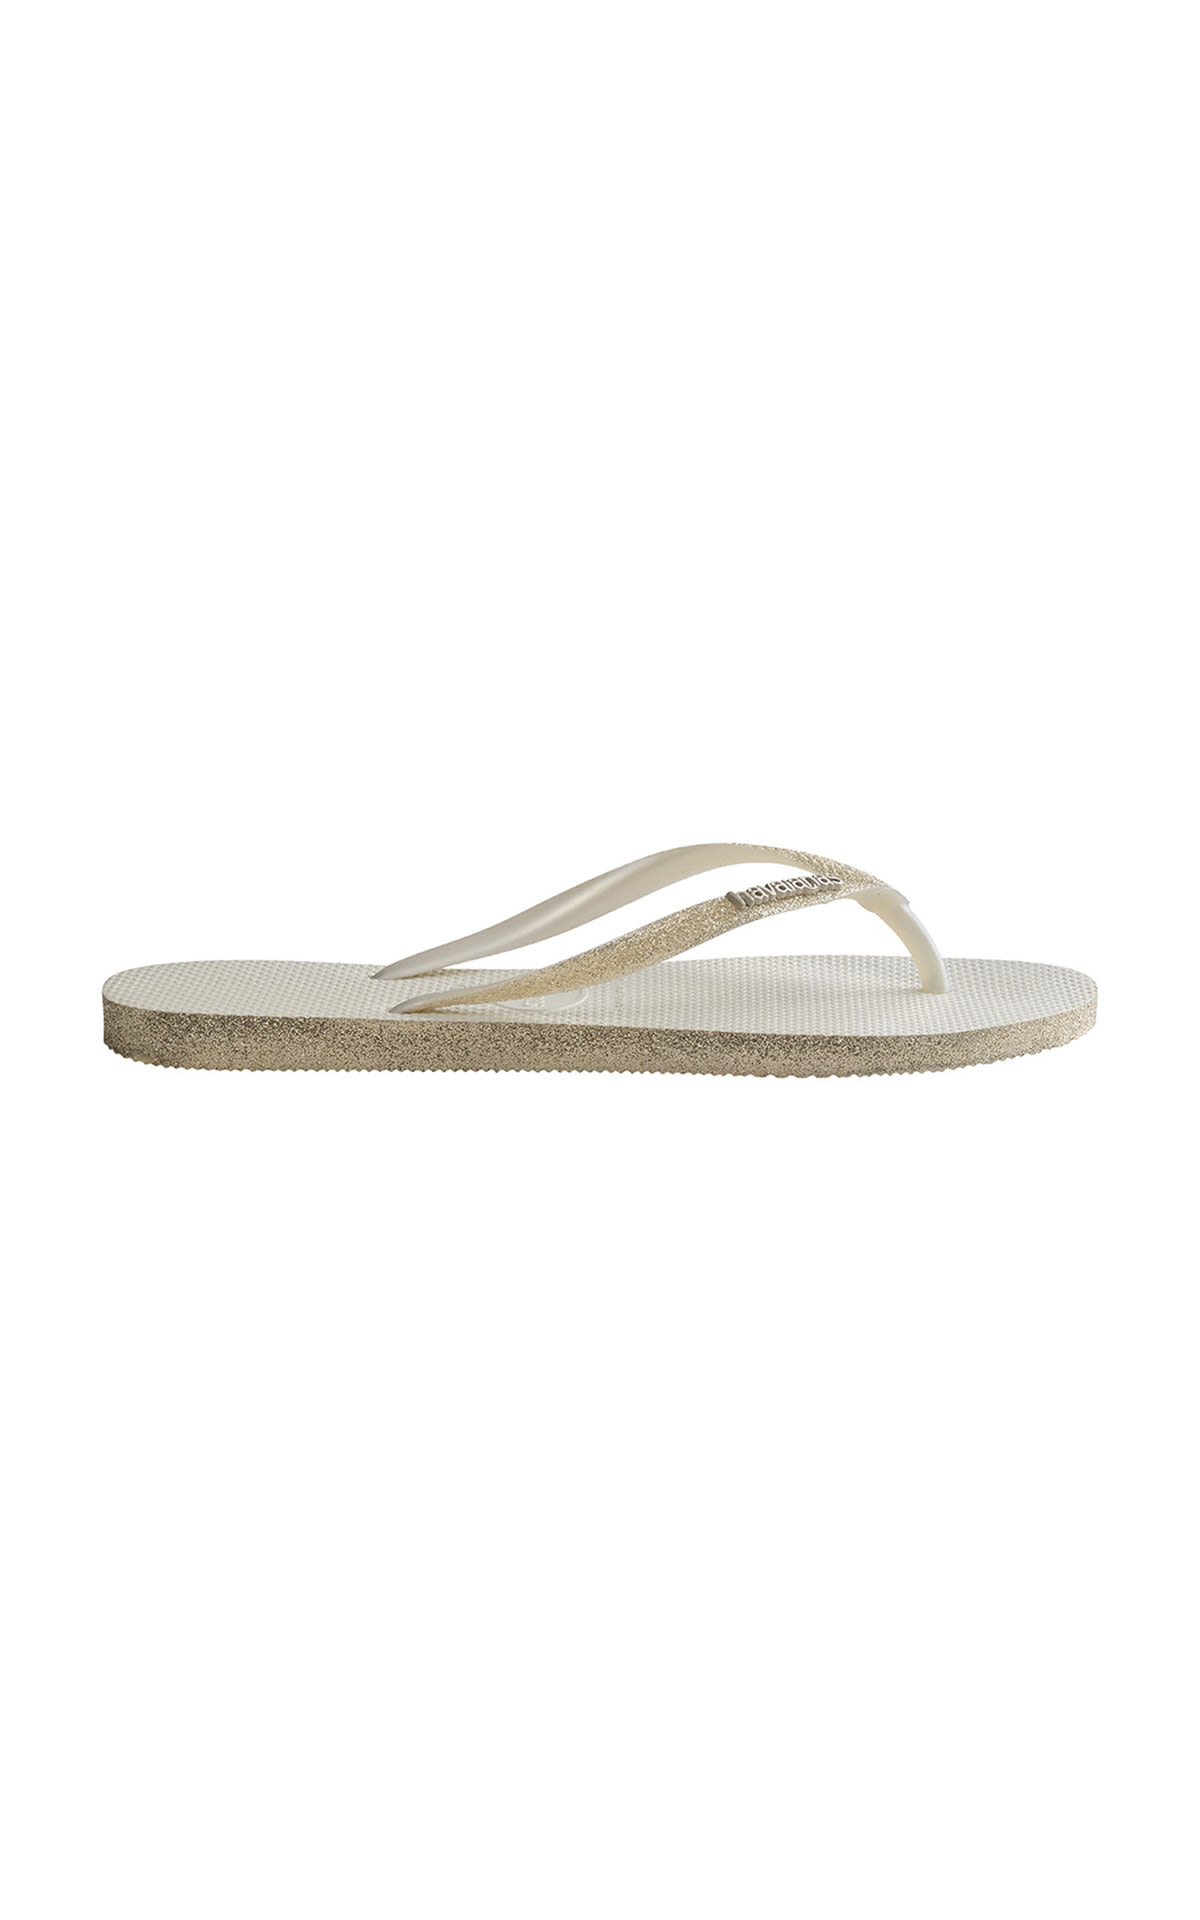 White beach flip flops with gold strap Havaianas